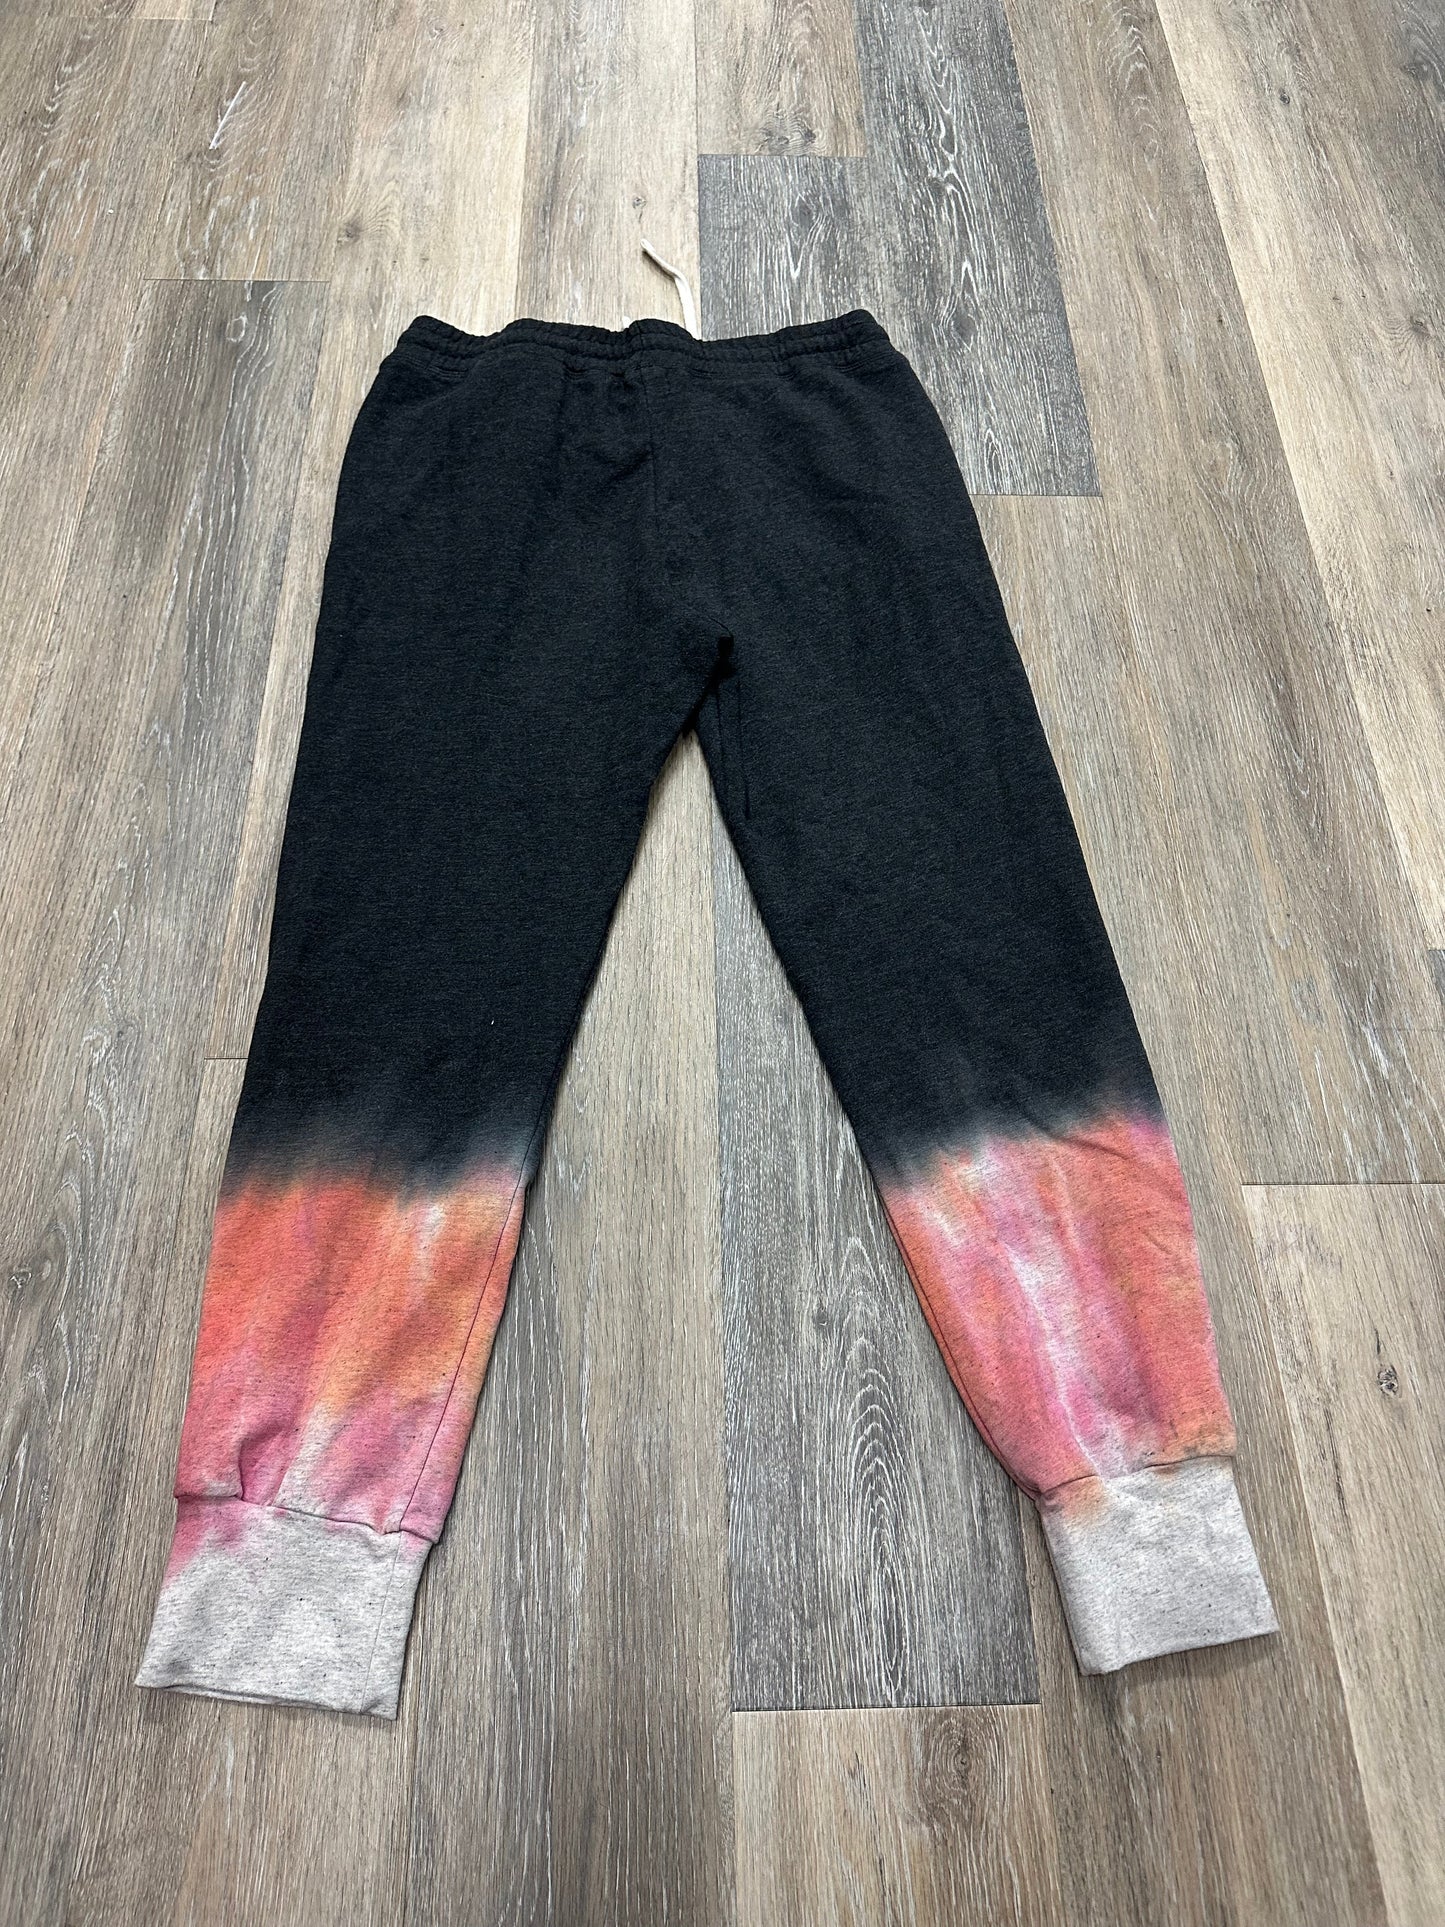 Pants Sweatpants By Sundry  Size: M